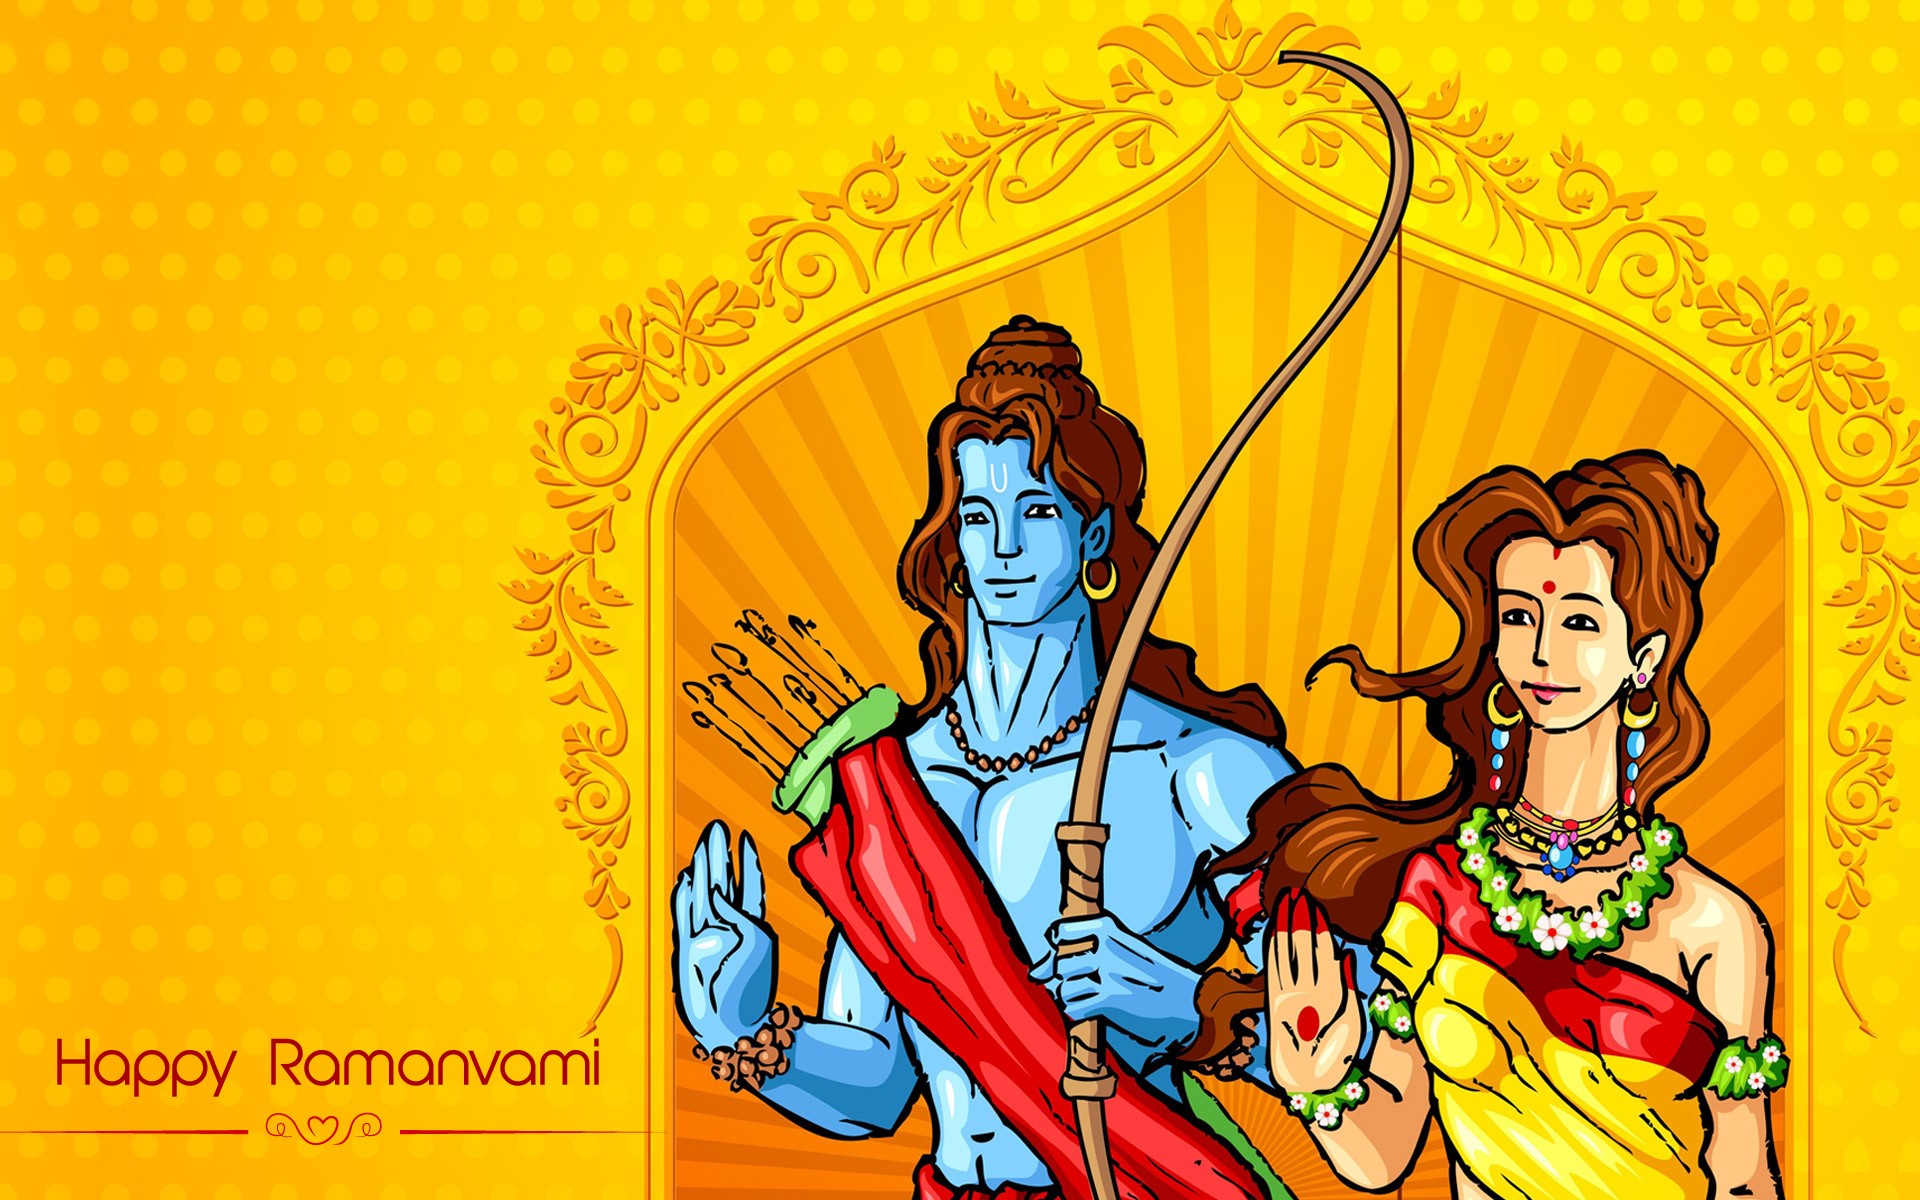 Sri Ram Navami Images HD Wallpapers - Happy Sri Rama ...